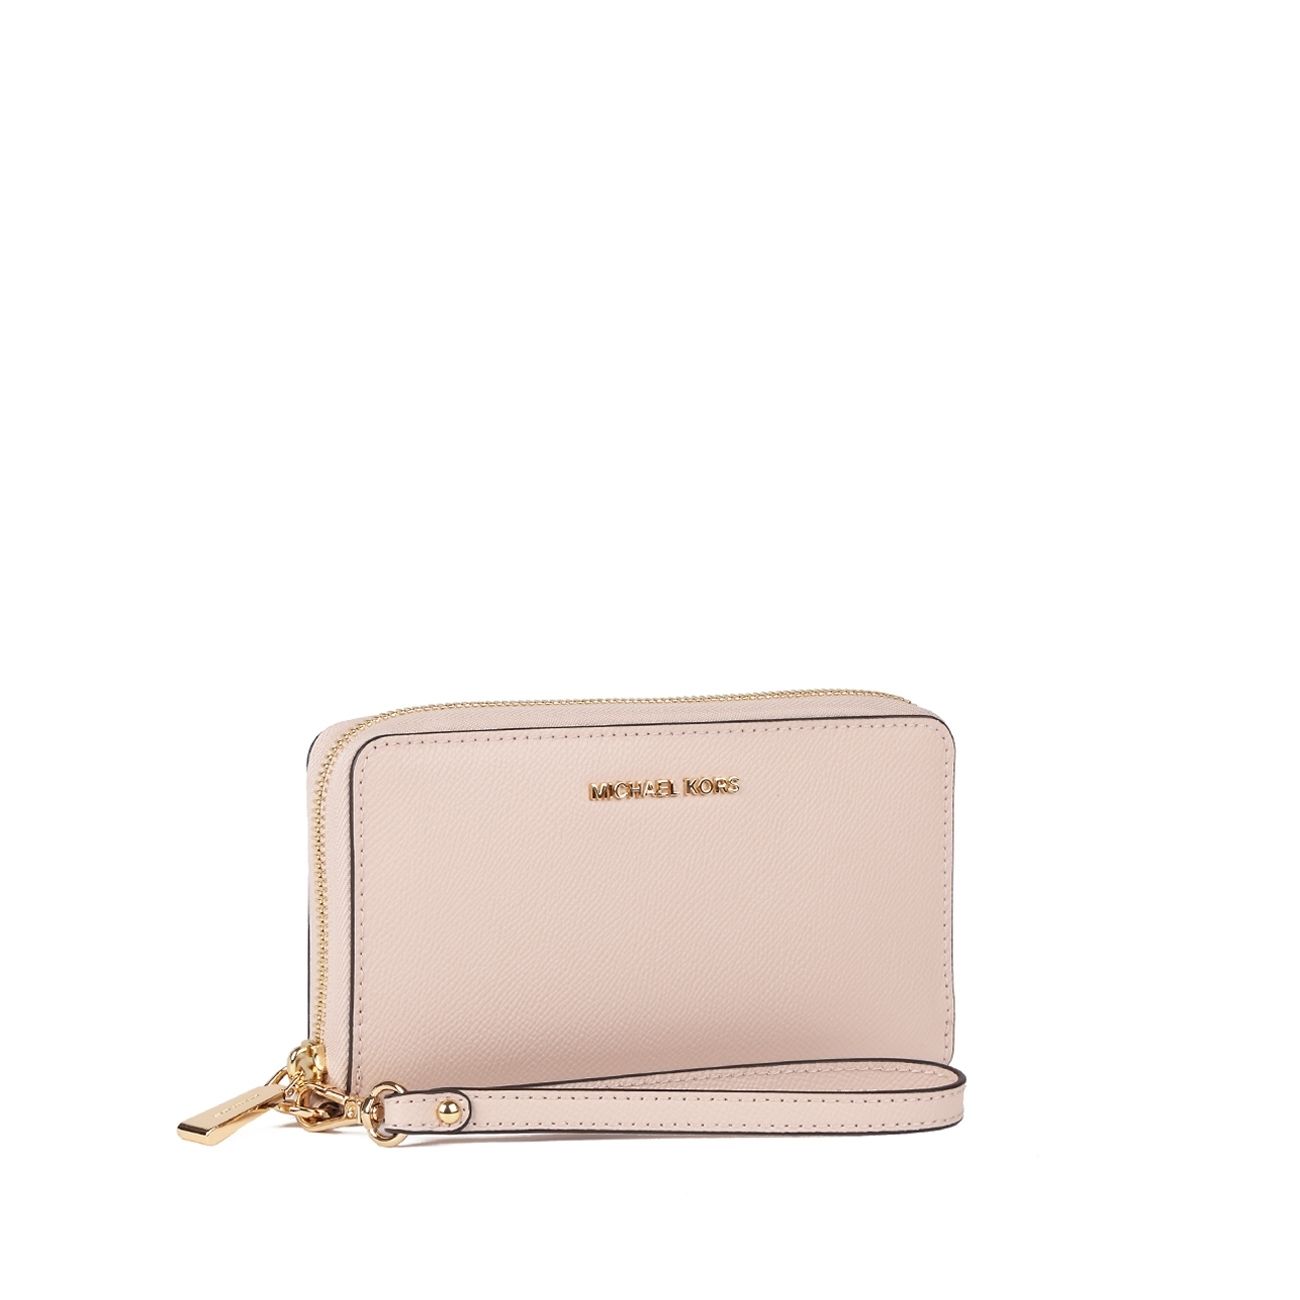 michael kors pale pink purse